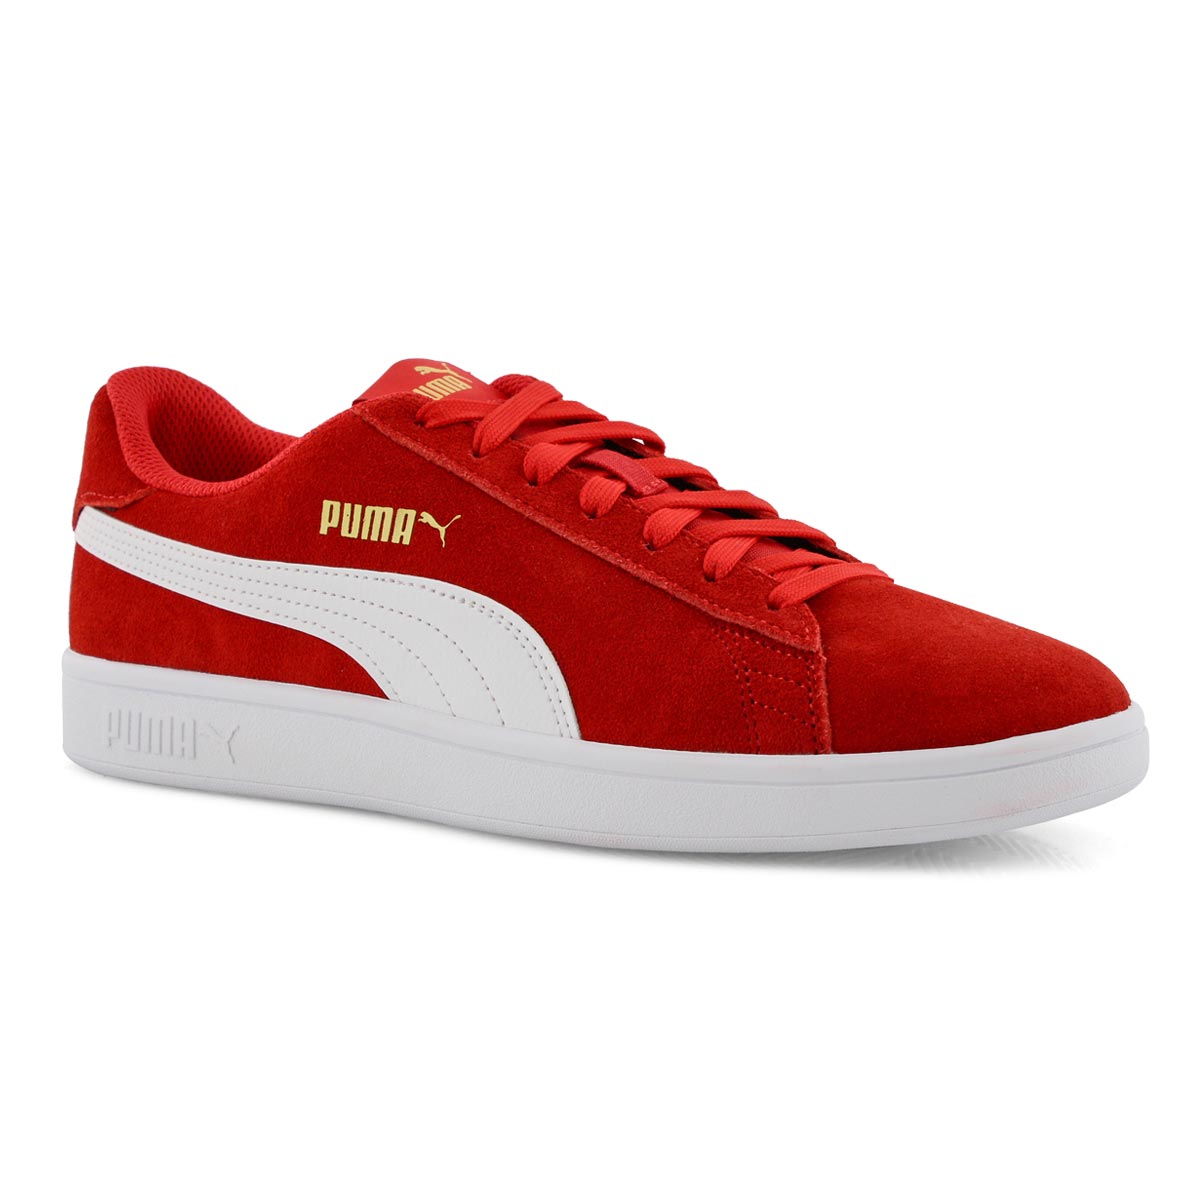 puma red white shoes